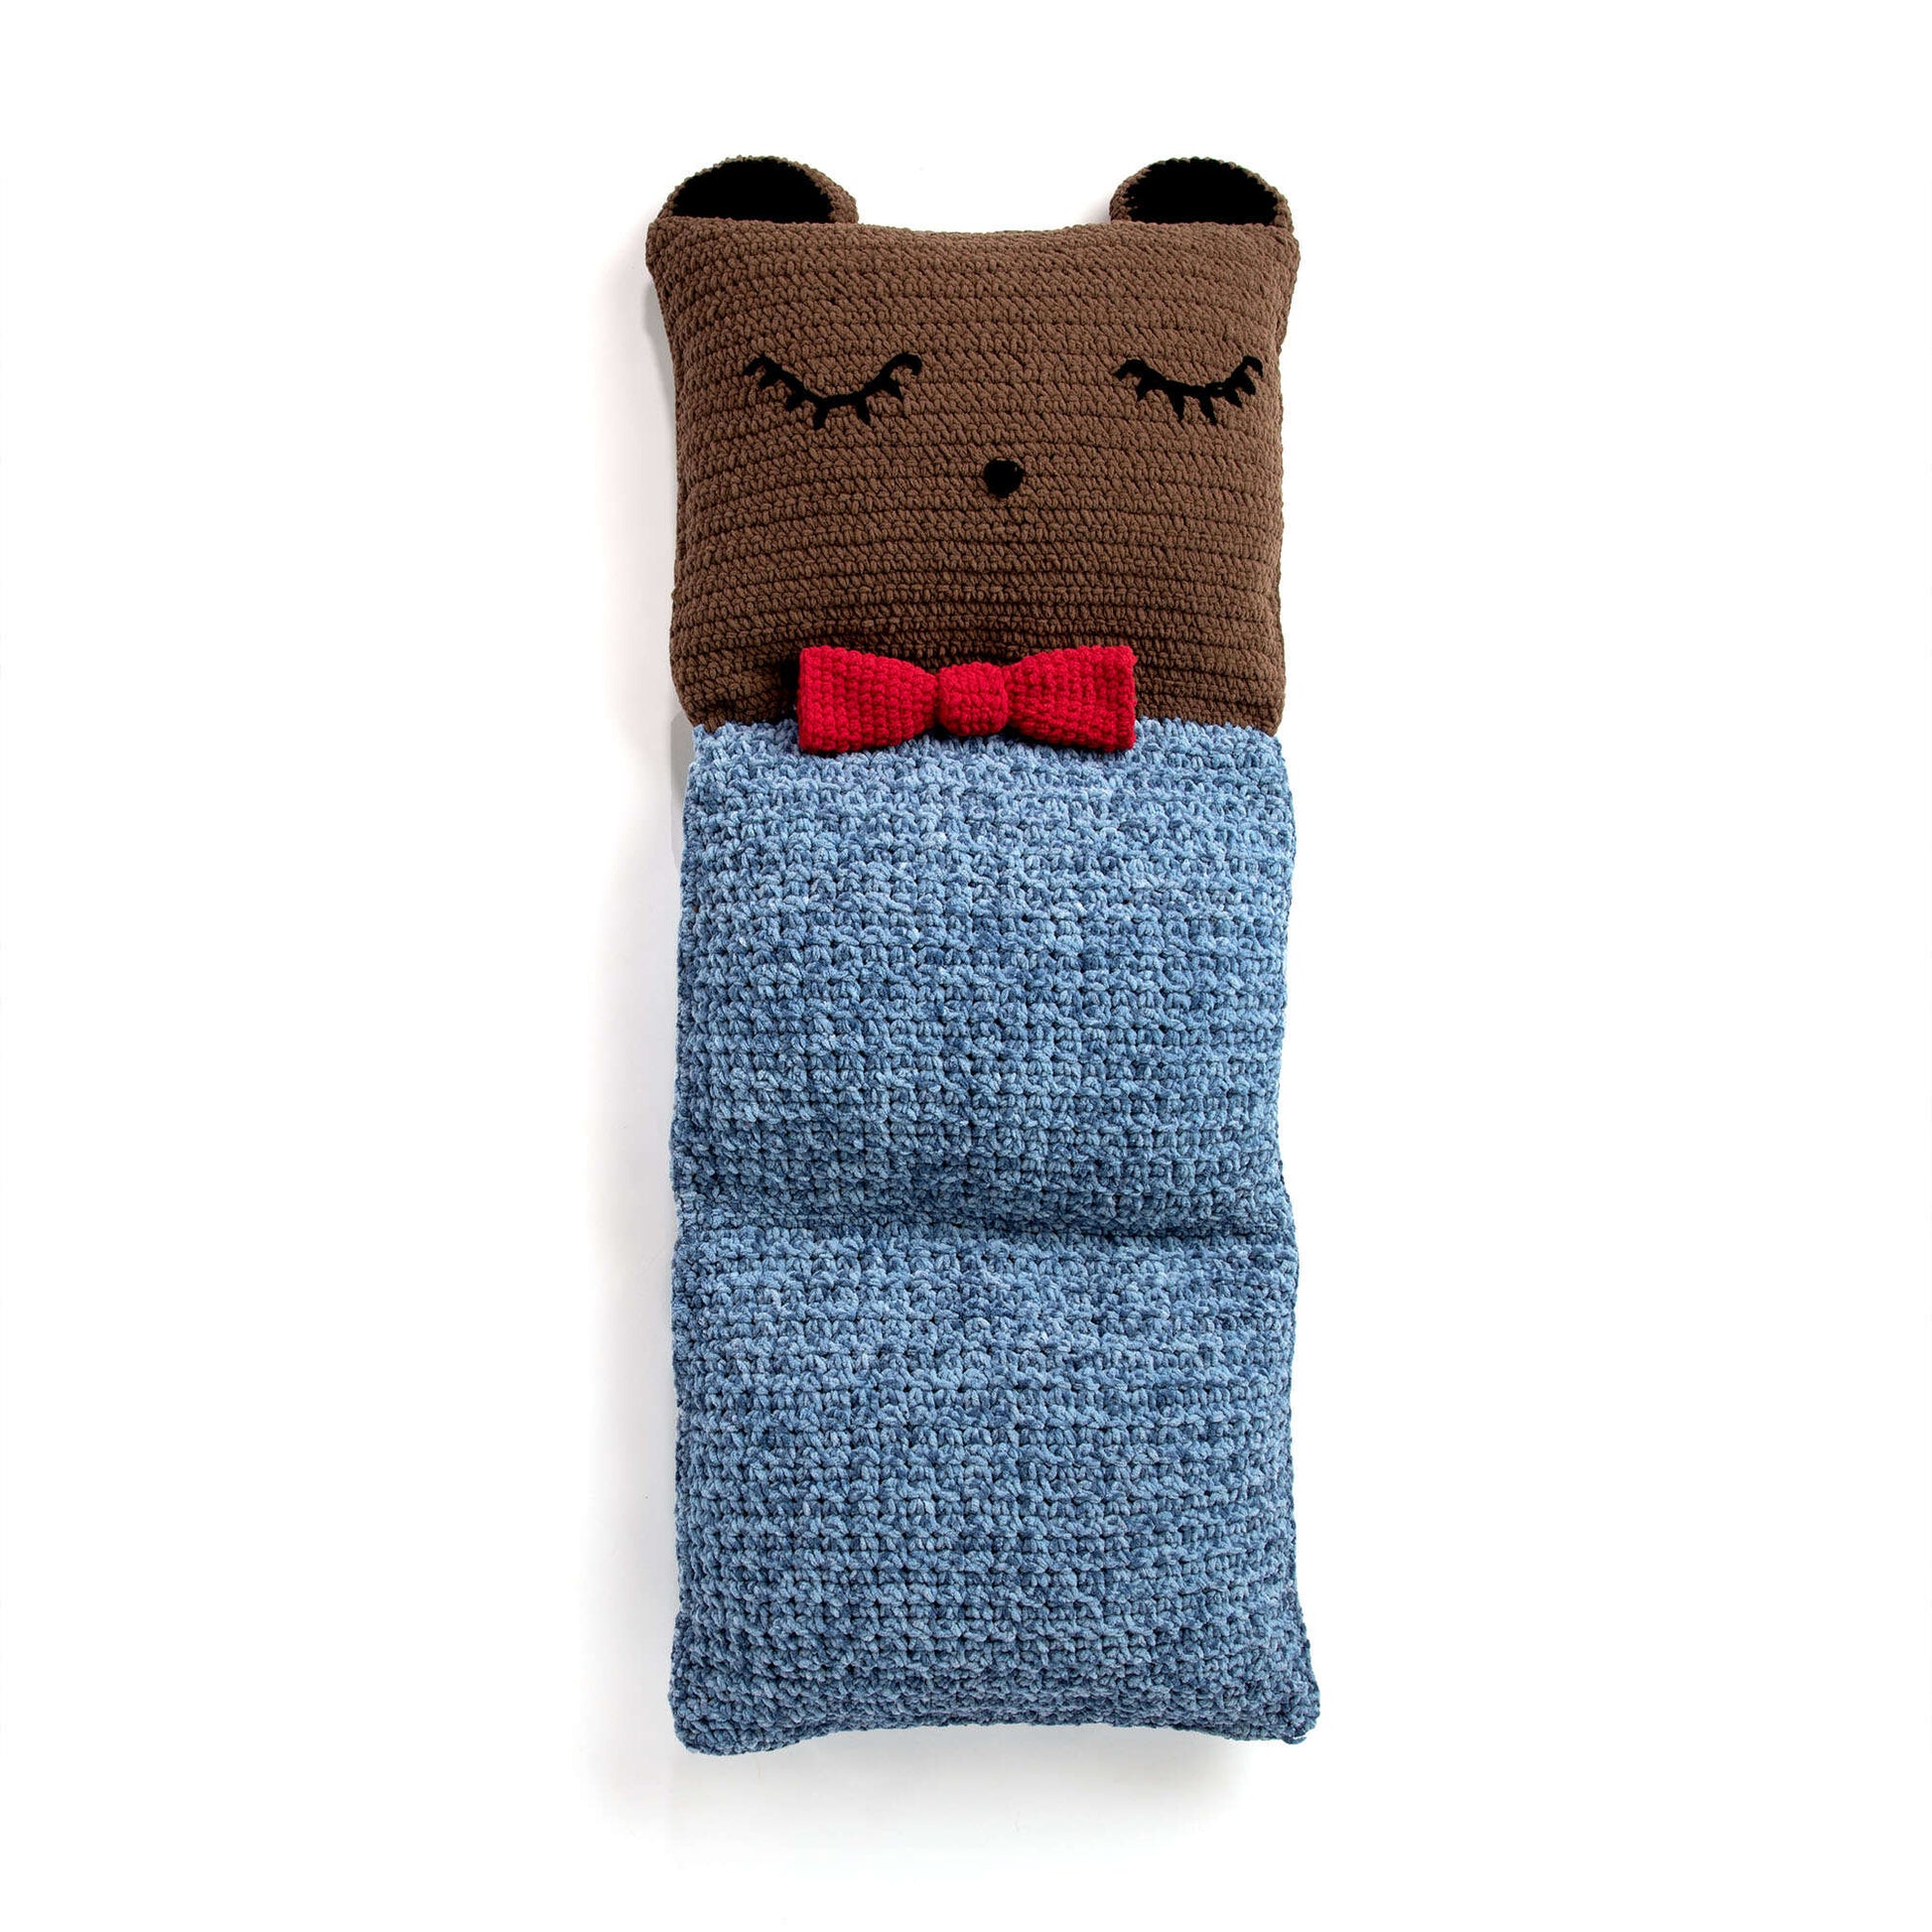 Bernat Bear-y Comfy Crochet Floor Pillow Crochet Pillow made in Bernat Baby Blanket yarn